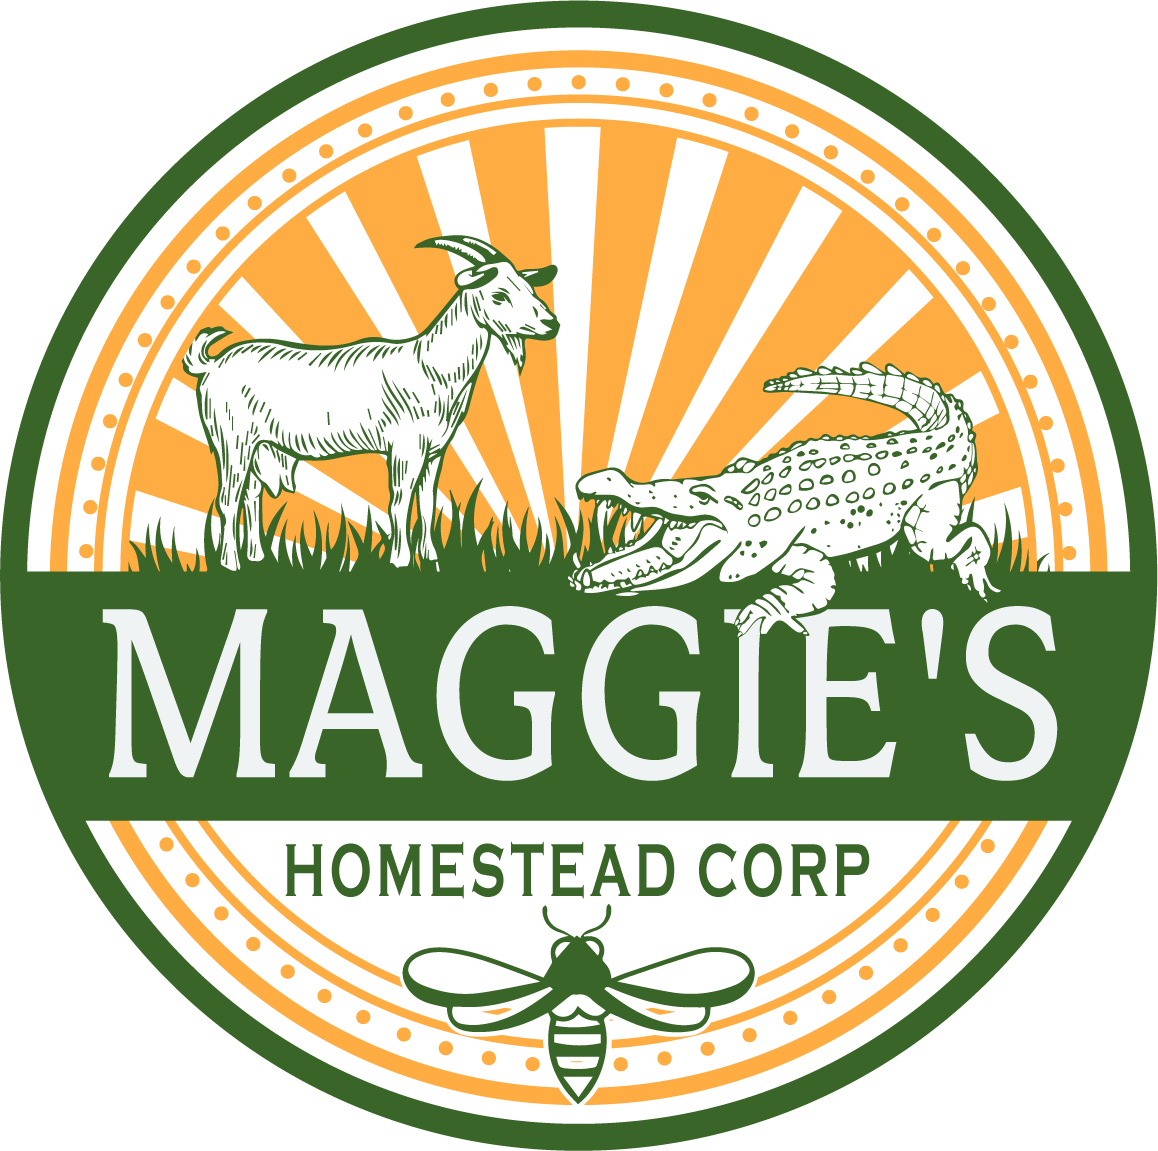 Maggie's Homestead